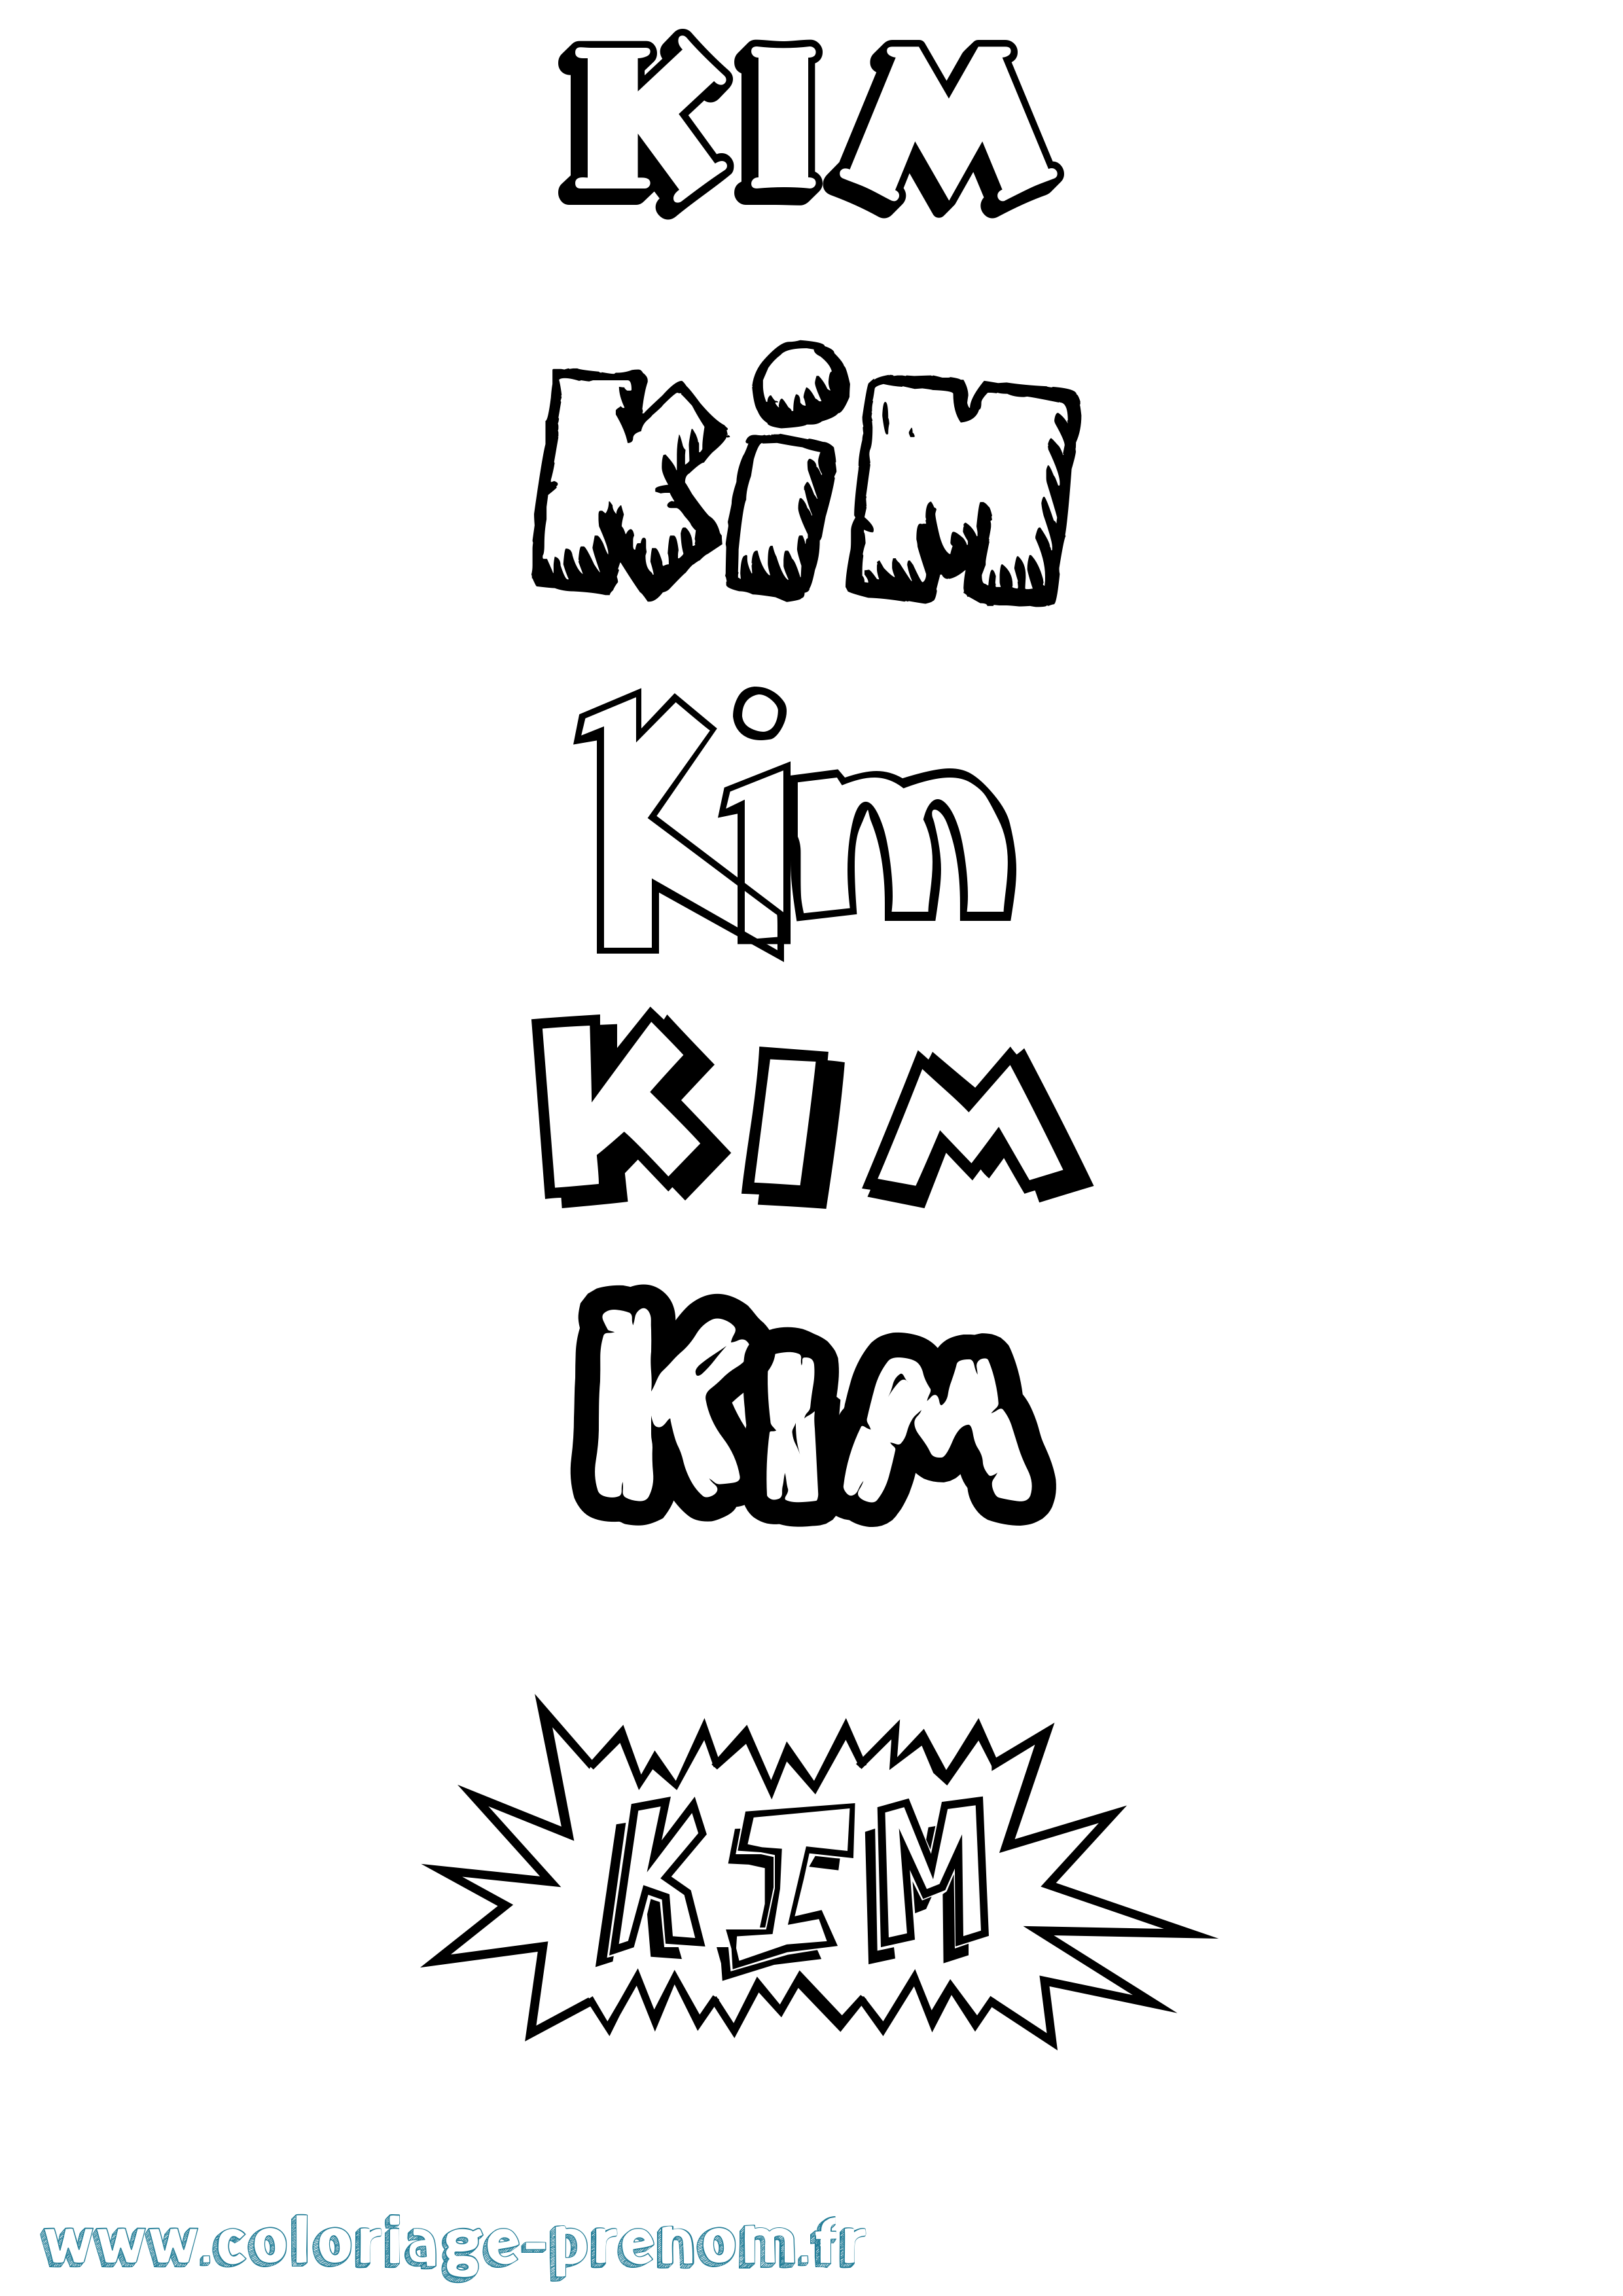 Coloriage prénom Kim